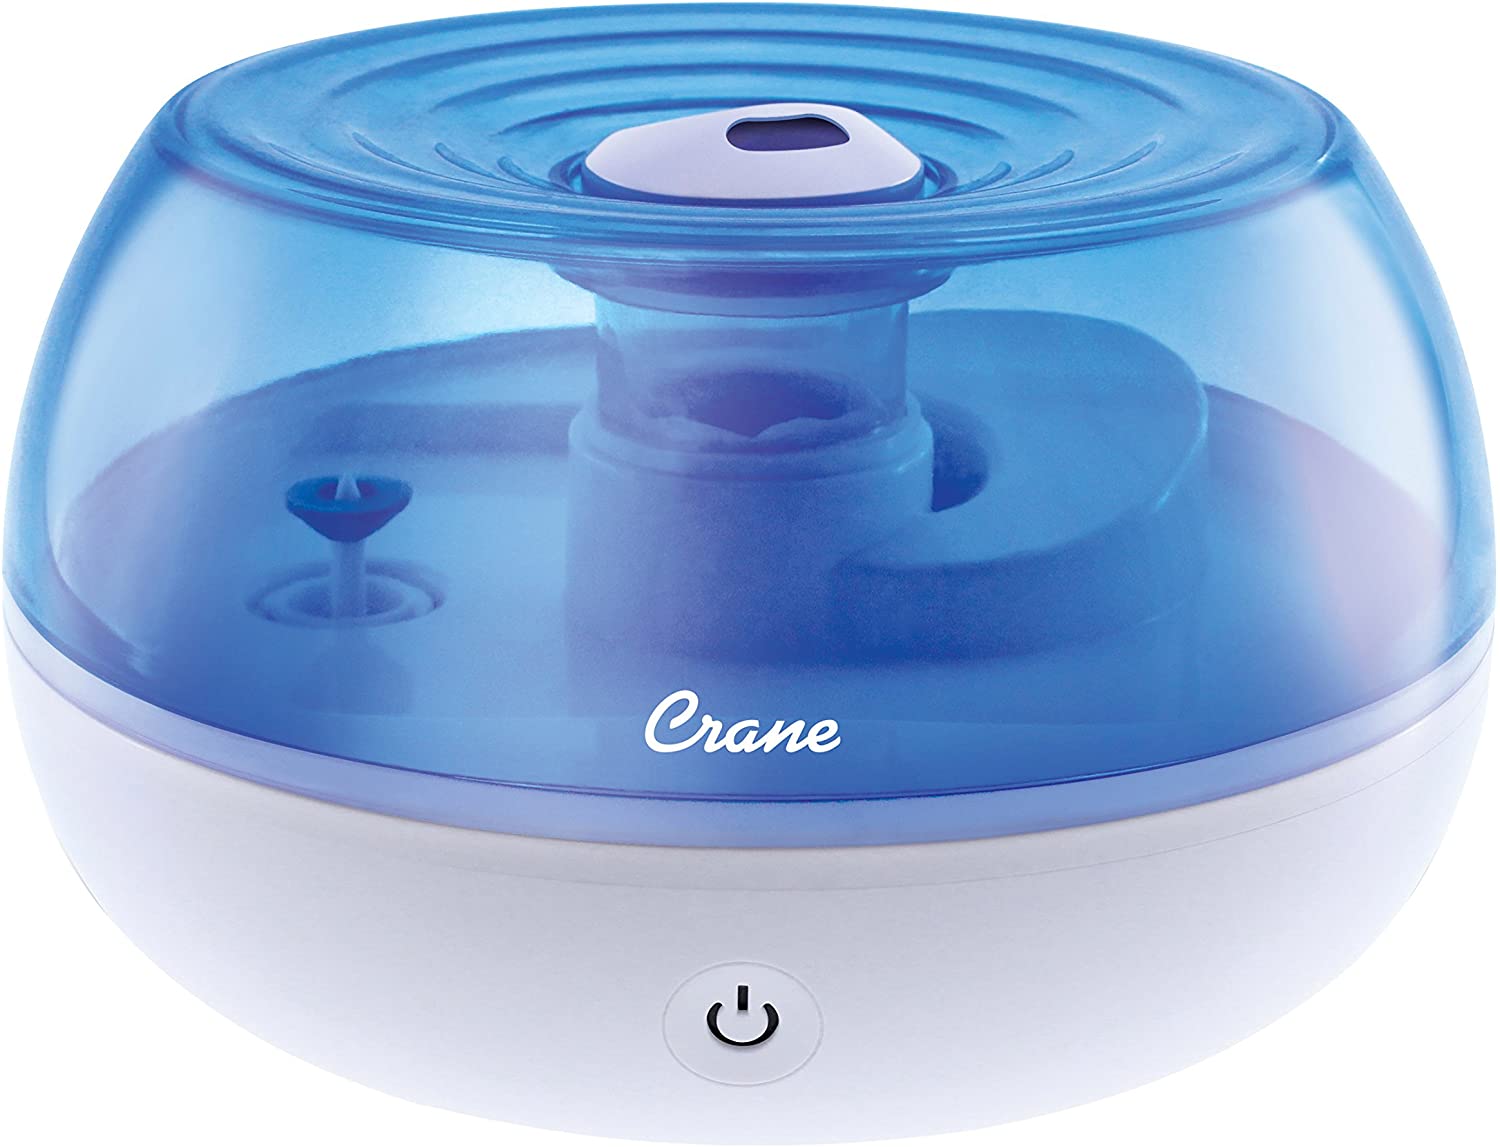 Crane Personal Ultrasonic Cool Mist Humidifier